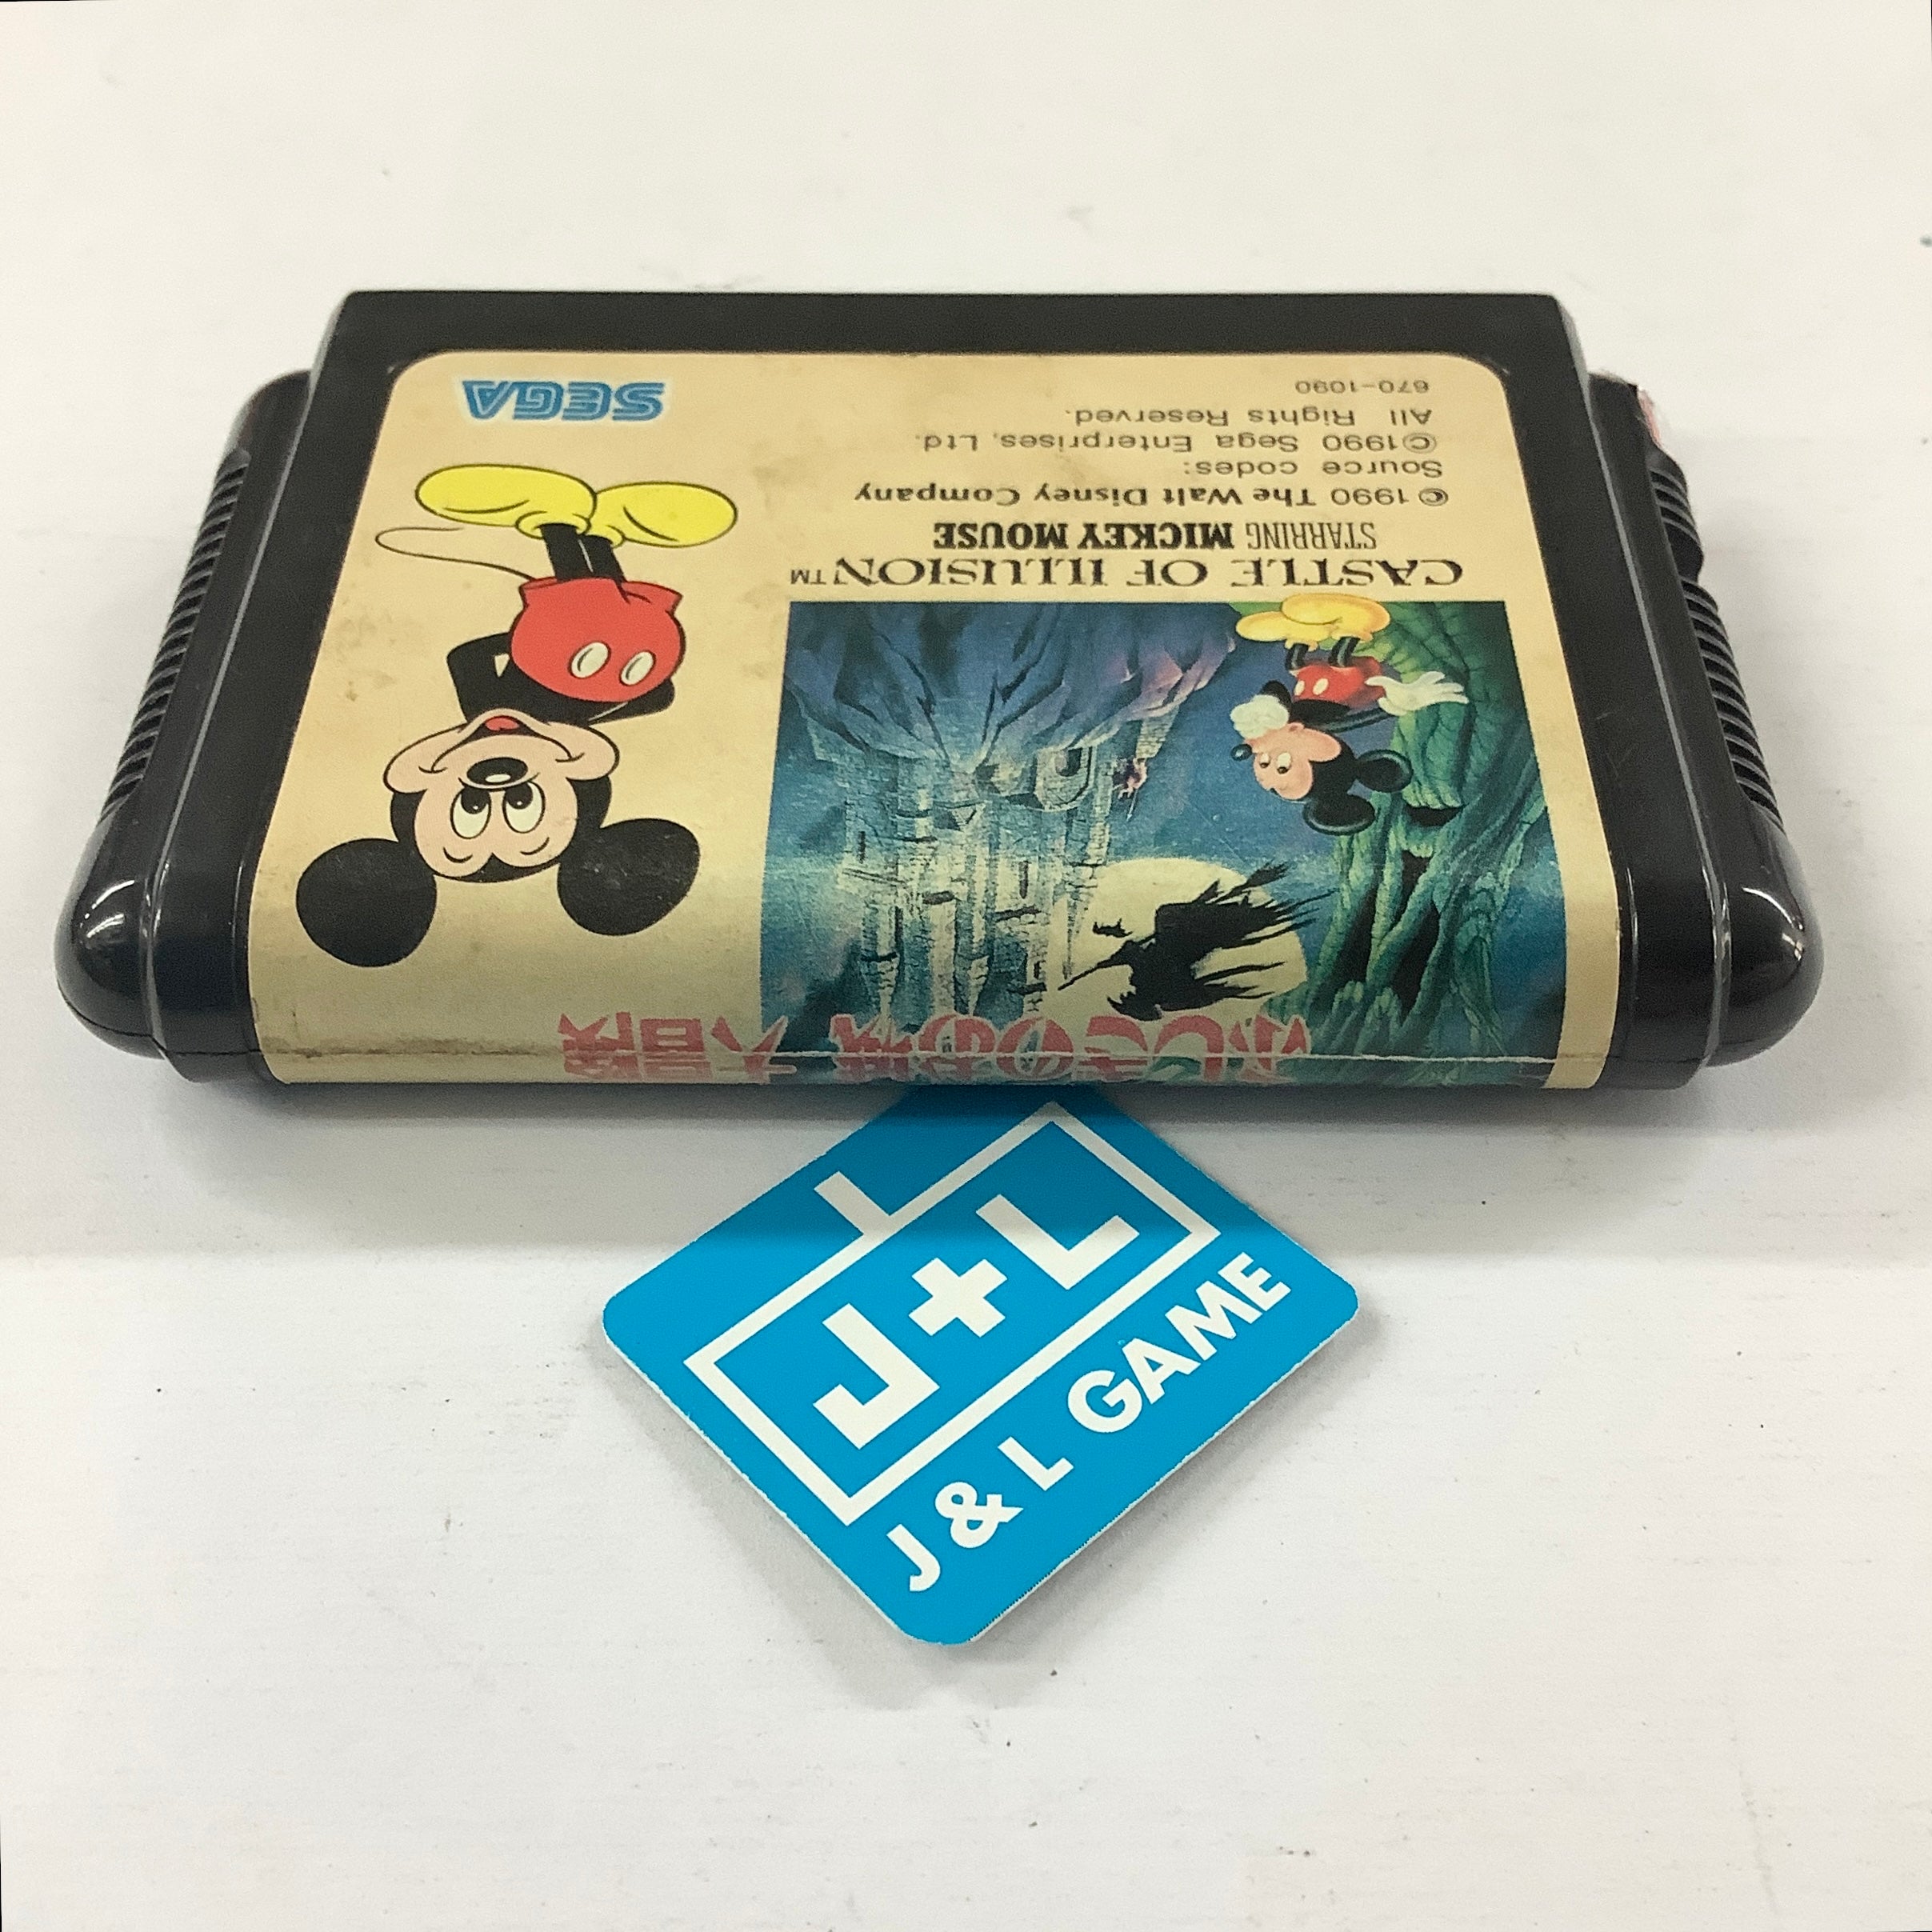 Castle of Illusion Starring Mickey Mouse - (SG) SEGA Mega Drive [Pre-Owned] (Japanese Import) Video Games Sega   